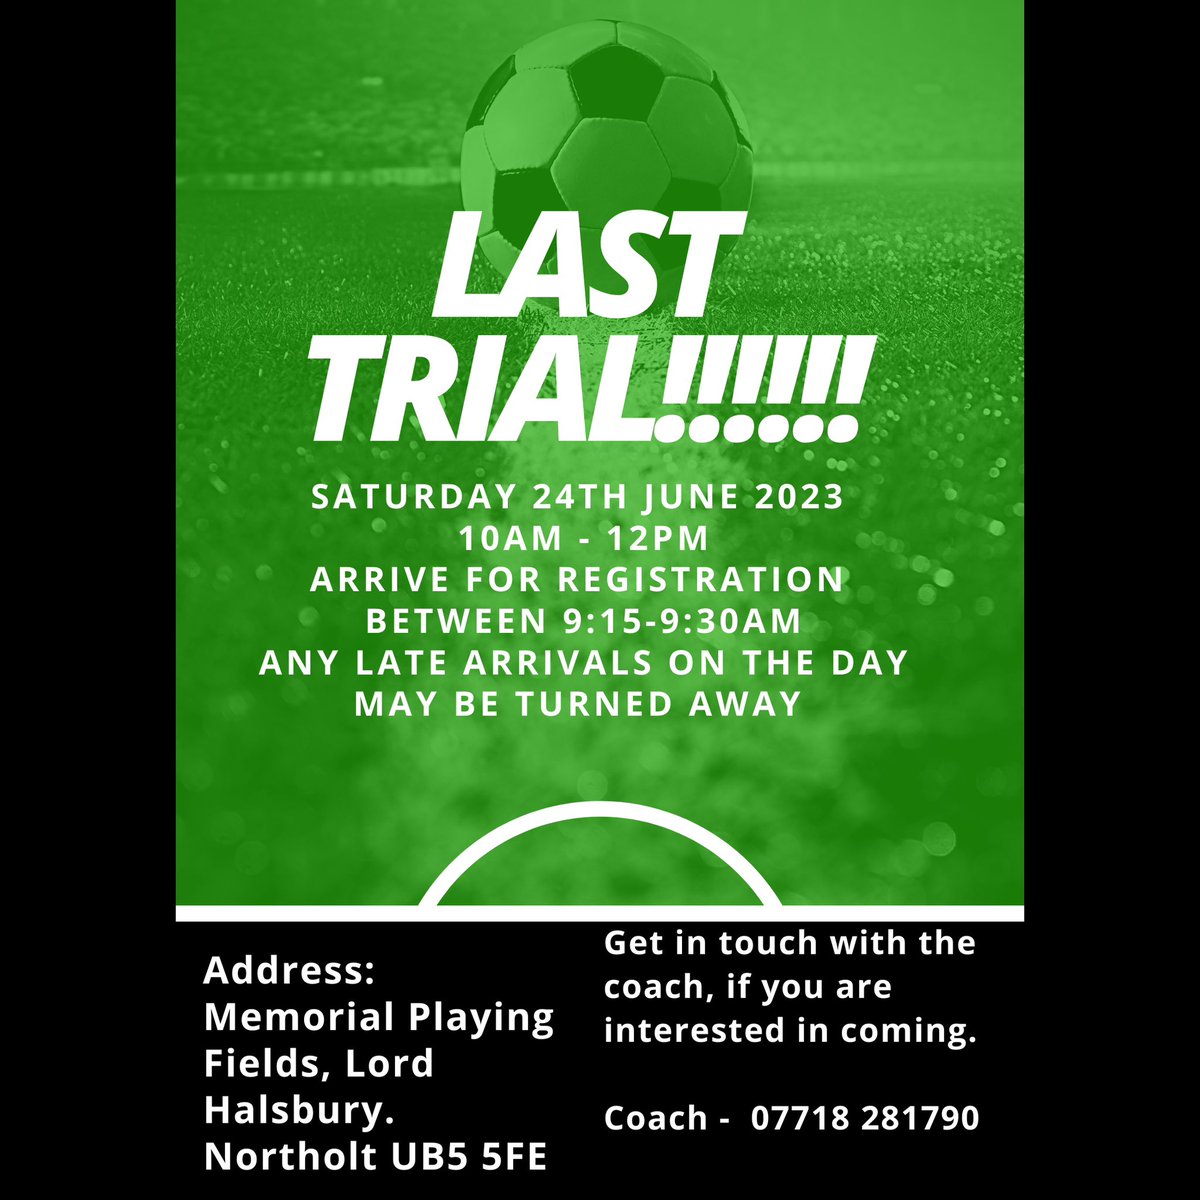 Our last trials Saturday! before pre-season begins! 

Details below:

#freeagent #westlondon #london #football #middlesexfootball